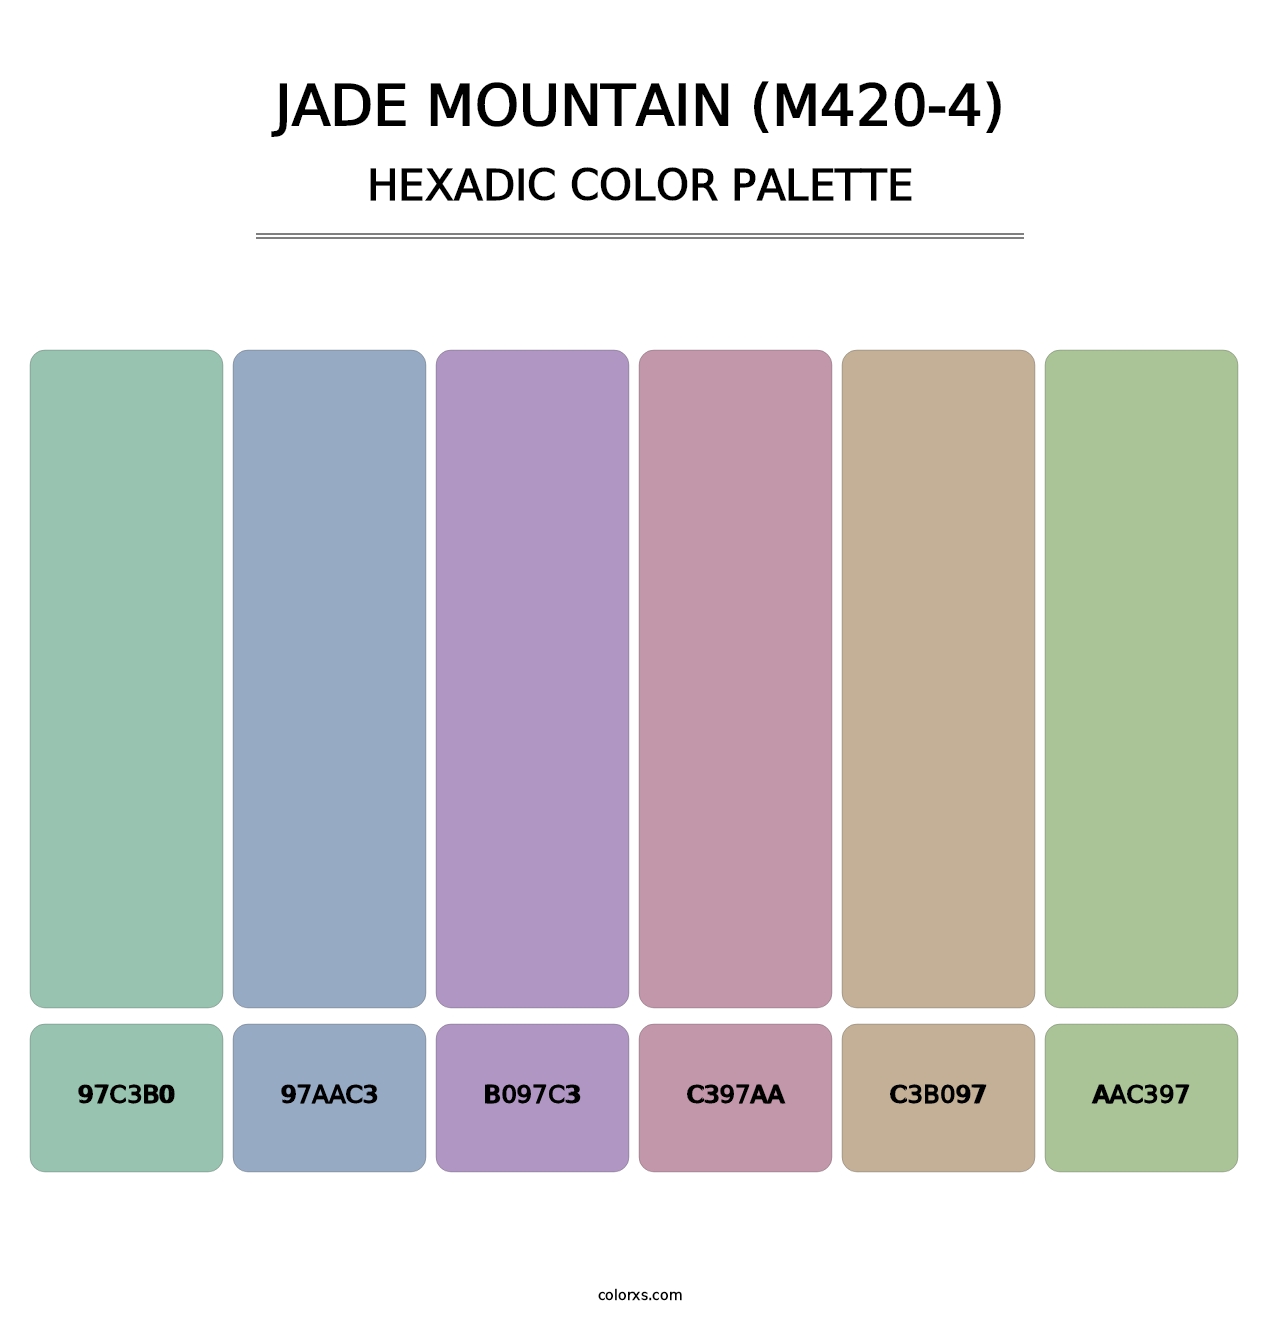 Jade Mountain (M420-4) - Hexadic Color Palette